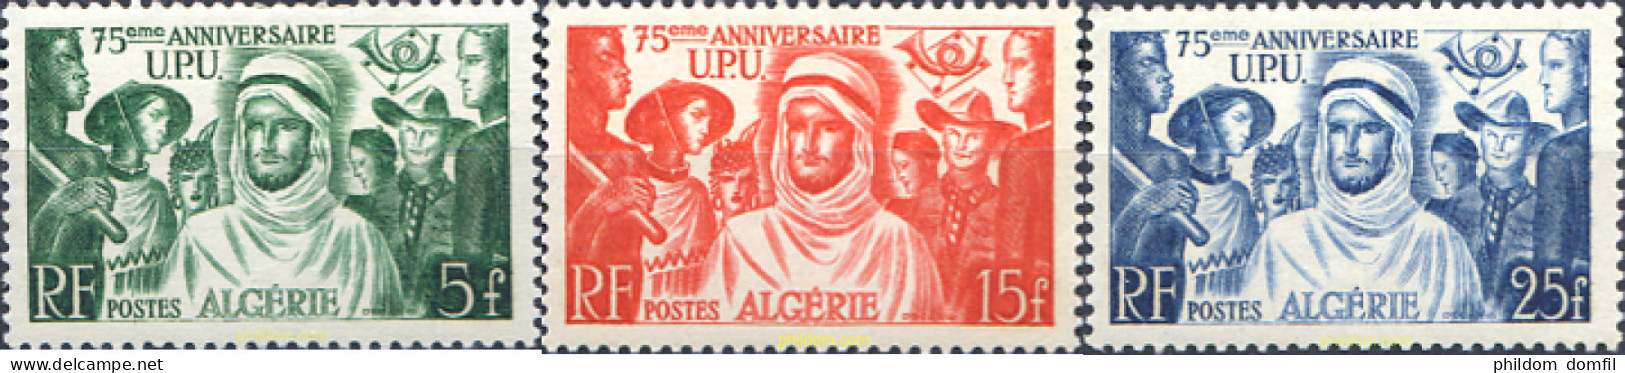 343182 HINGED ARGELIA 1949 75 ANIVERSARIO DE LA UNION POSTAL UNIVERSAL - Algérie (1962-...)